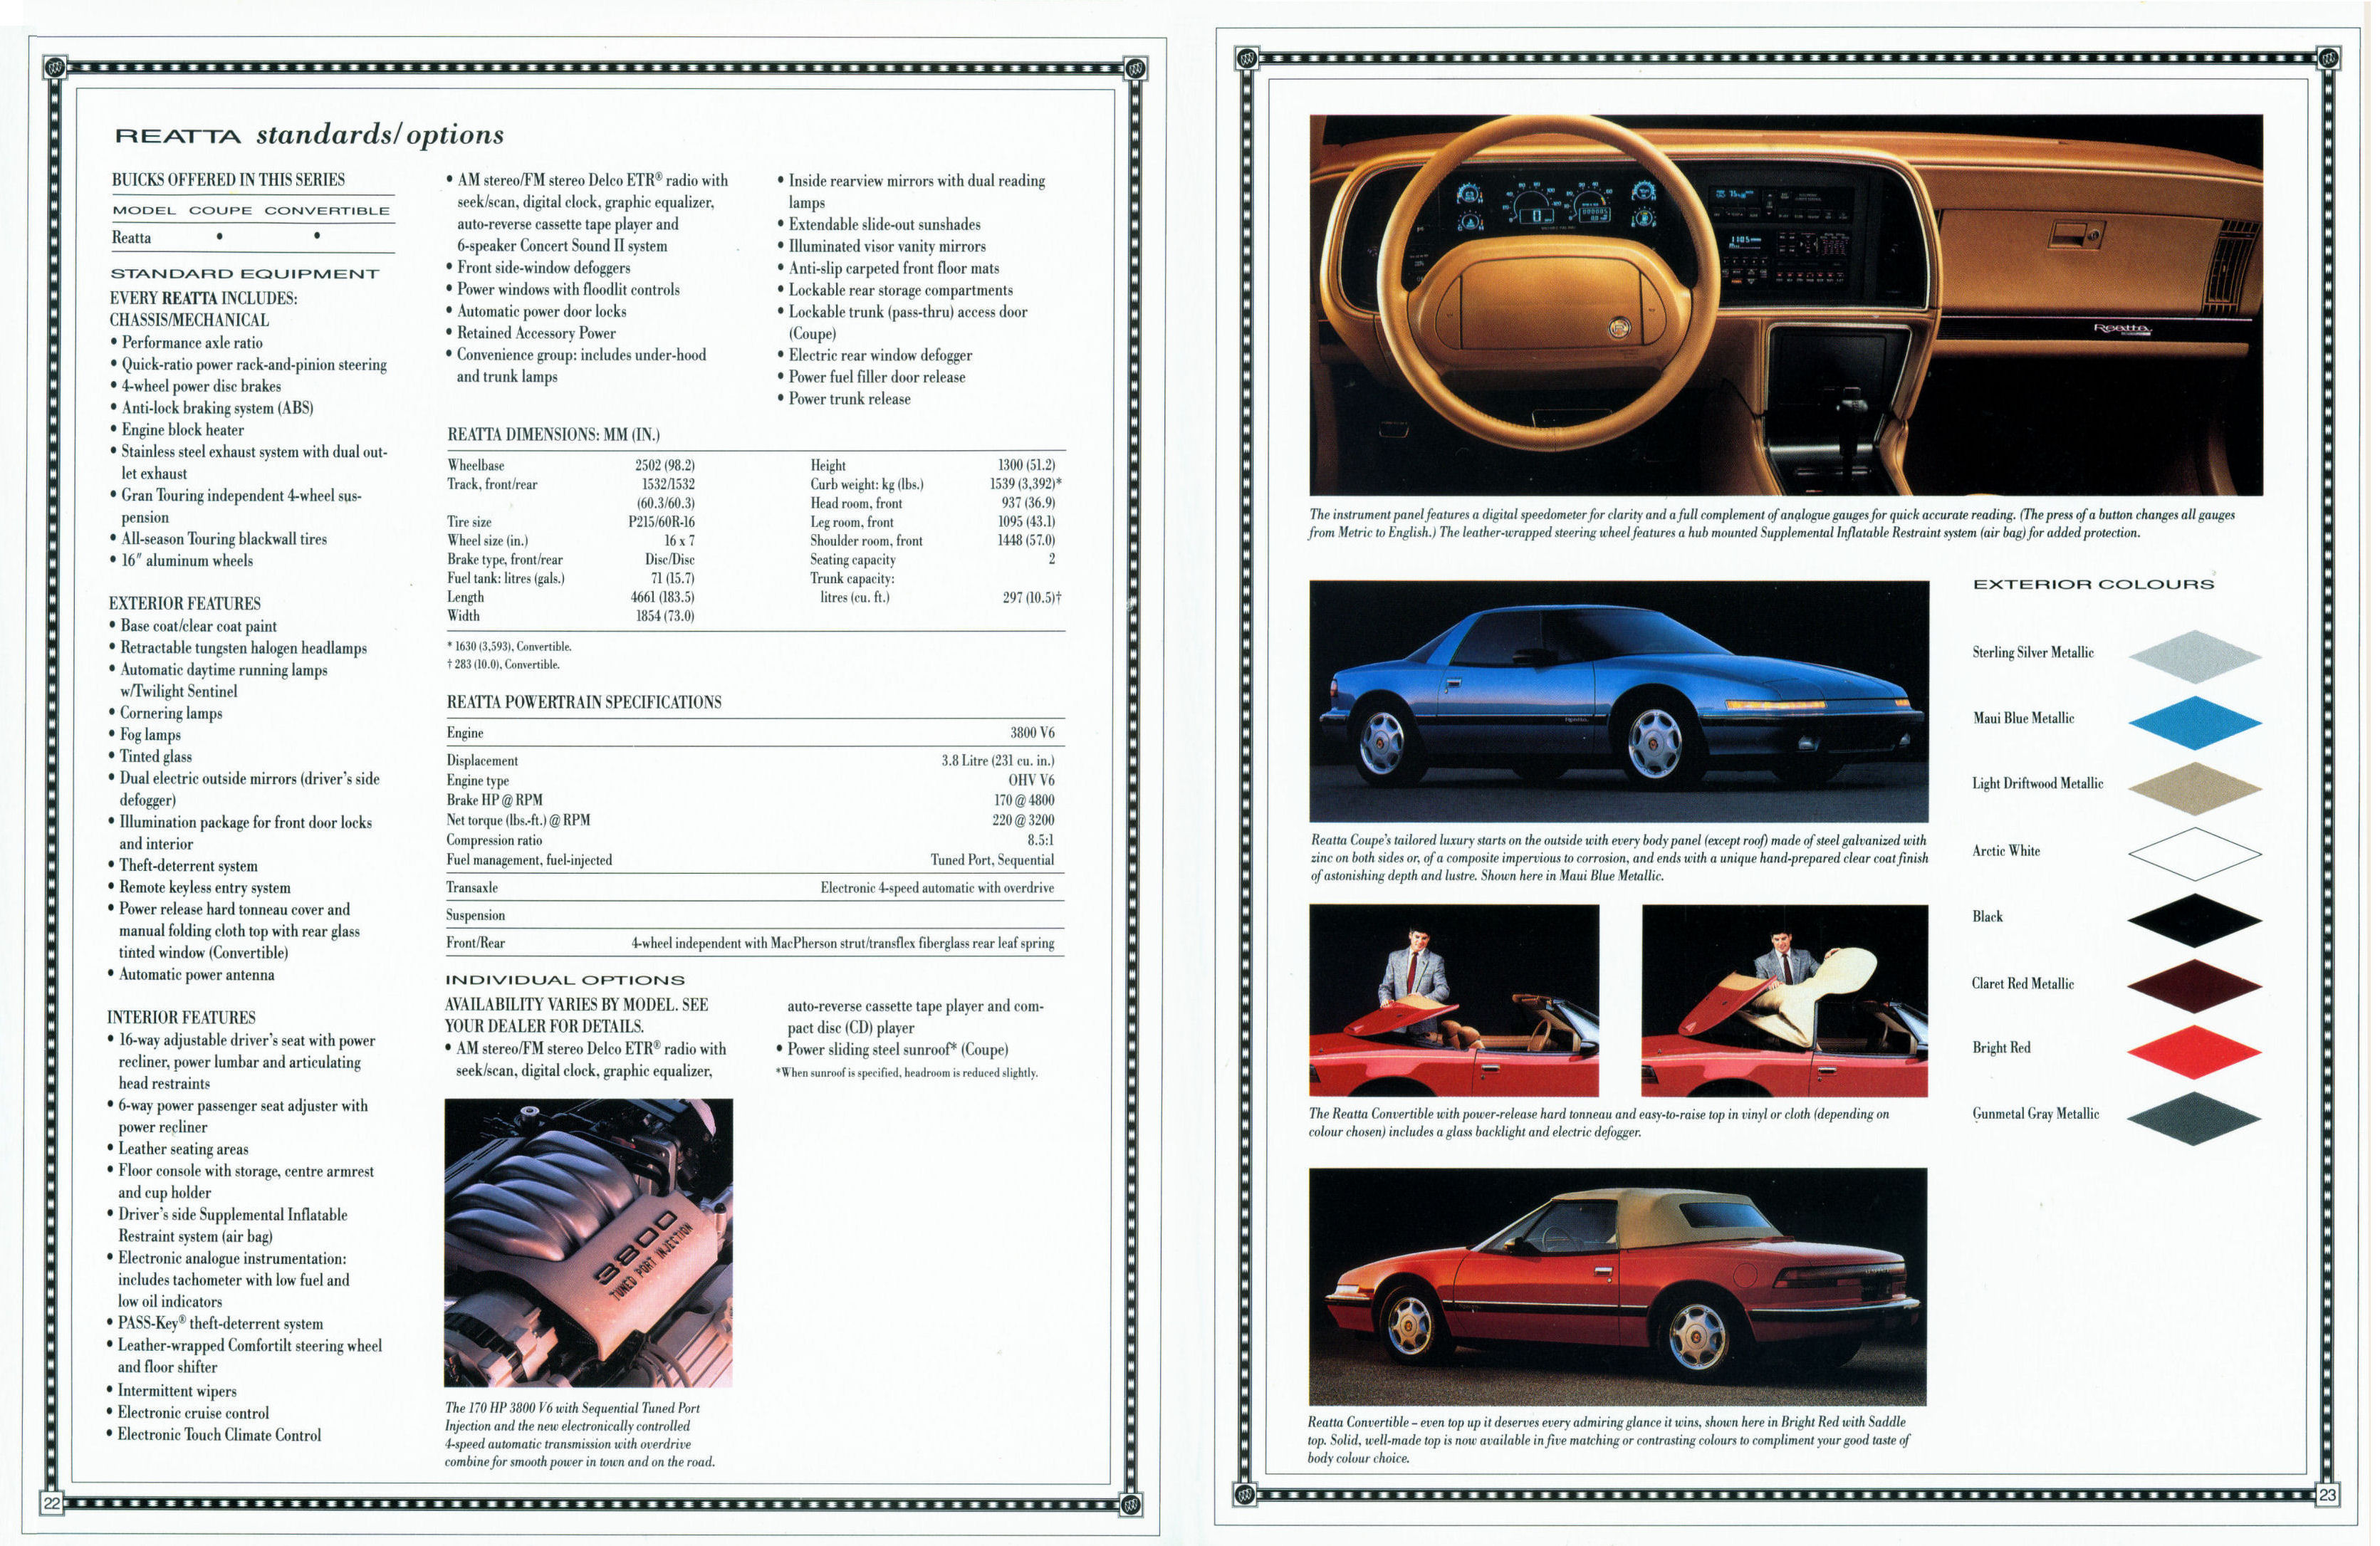 1991_Buick_Full_Line_Prestige_Cdn-22-23